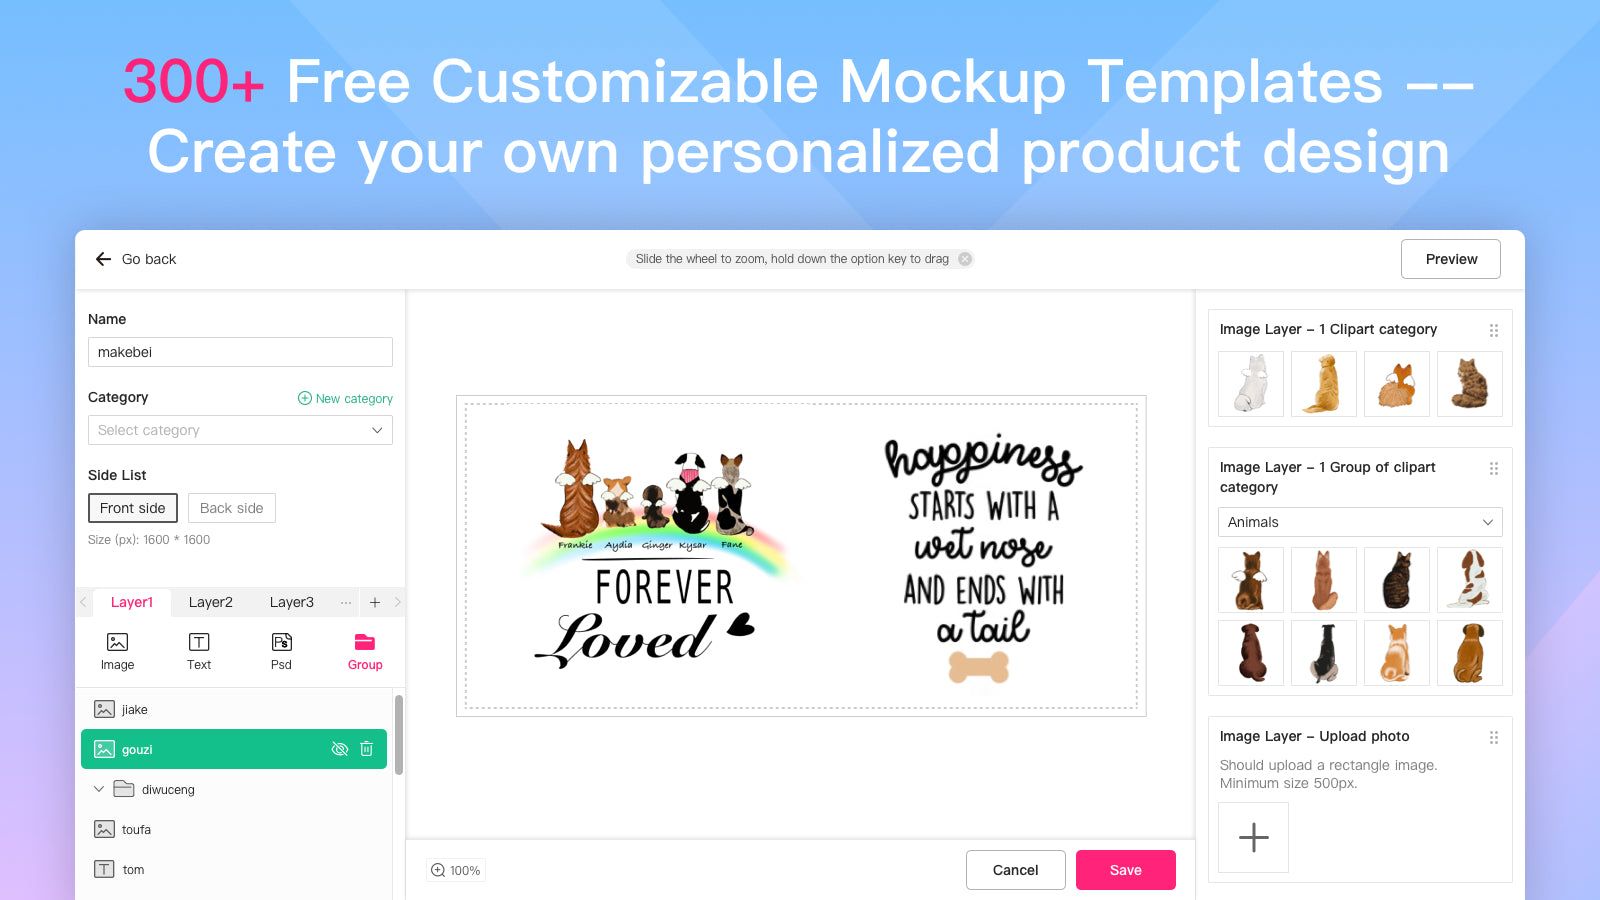 300+ Free customizable Mockup Templates